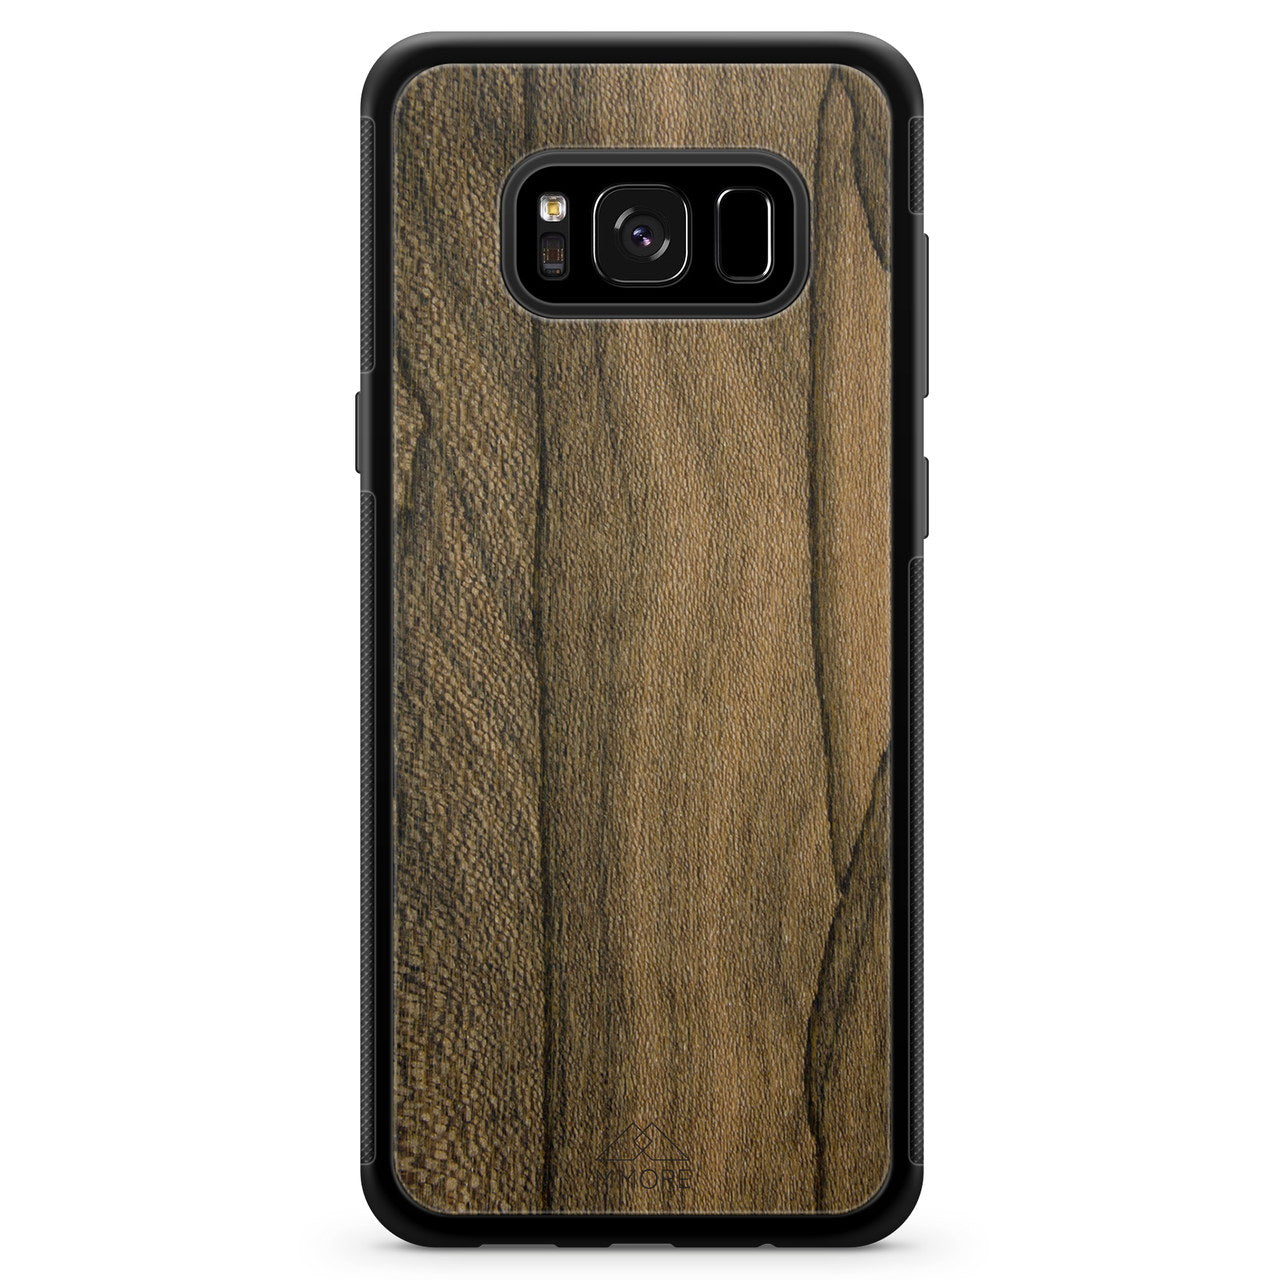 Caja del teléfono Samsung S8 de madera de ziricote